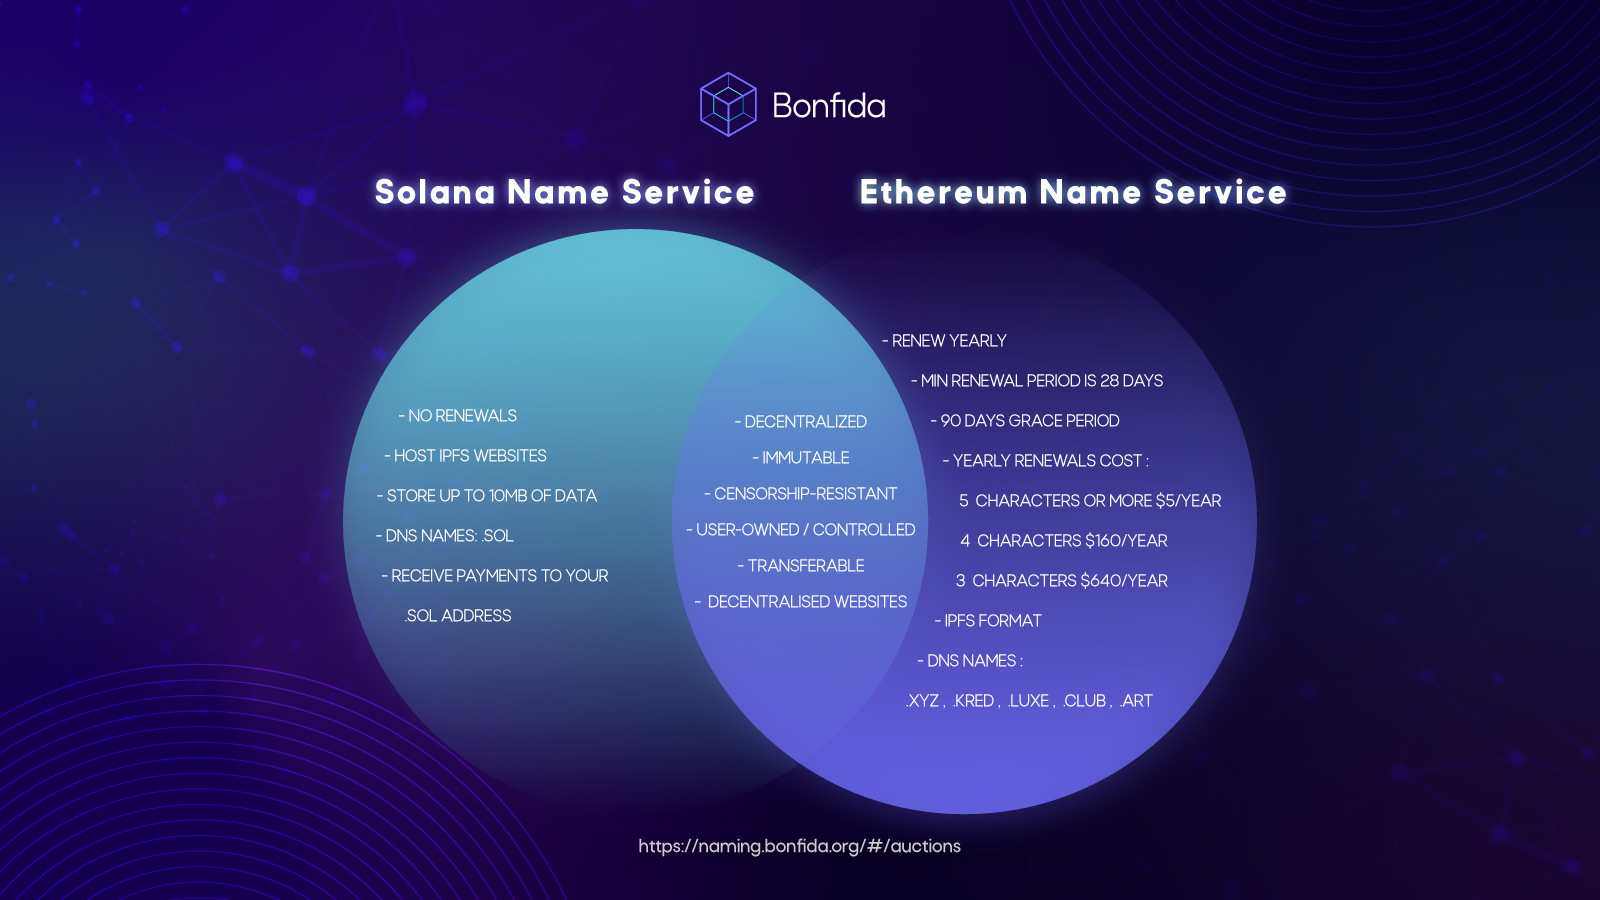 About the integration Bonfidas Solana Name Service 1